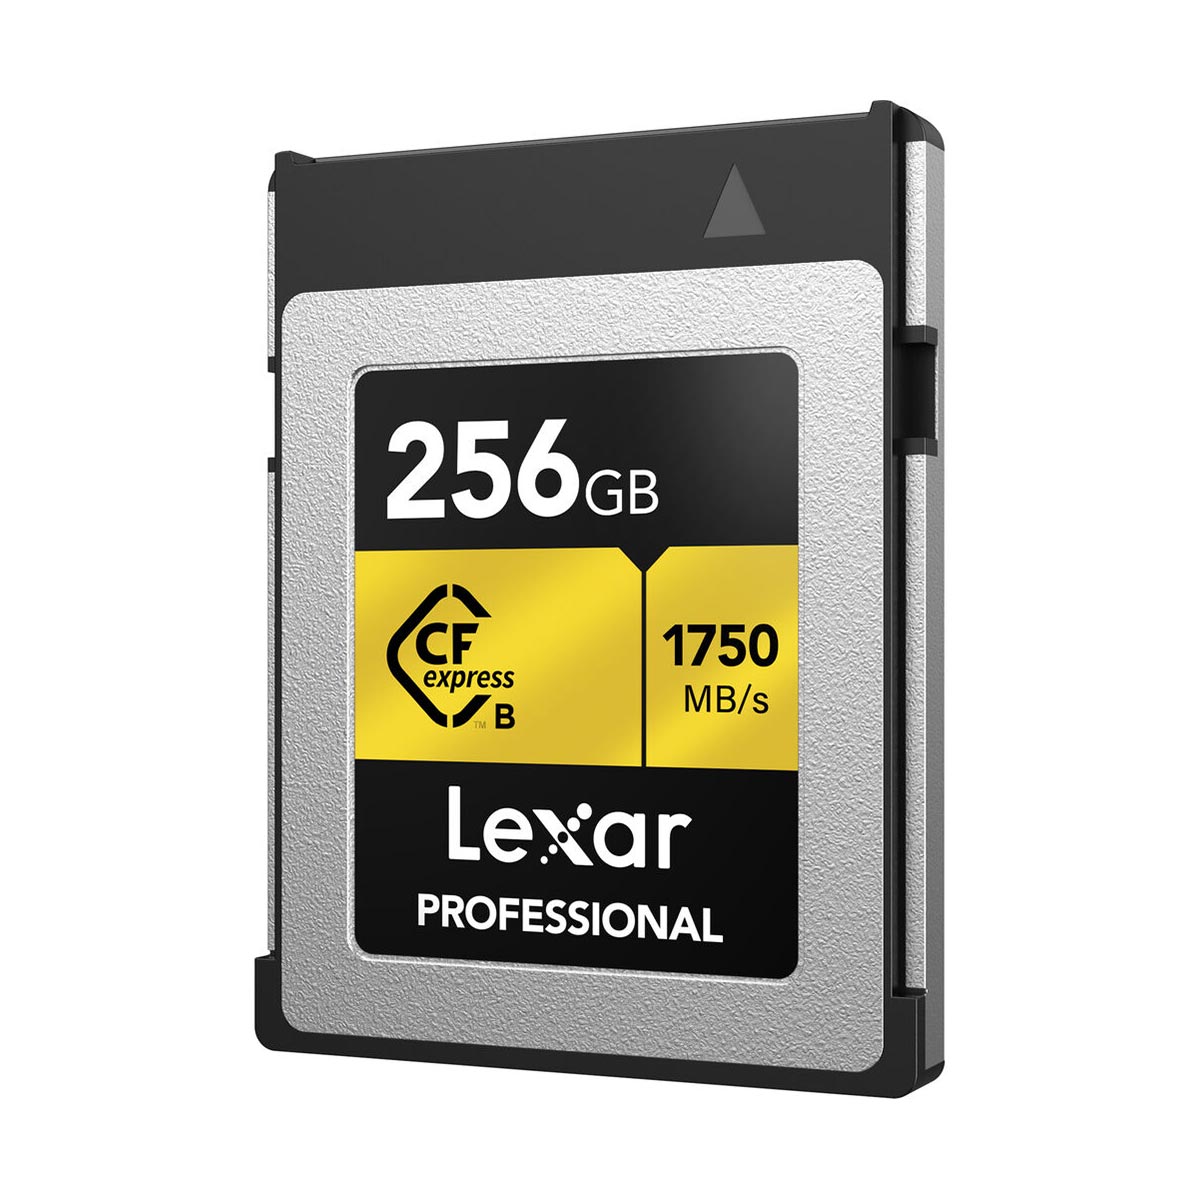 Lexar 256GB Professional CFexpress Type-B Memory Card (Gold Series)